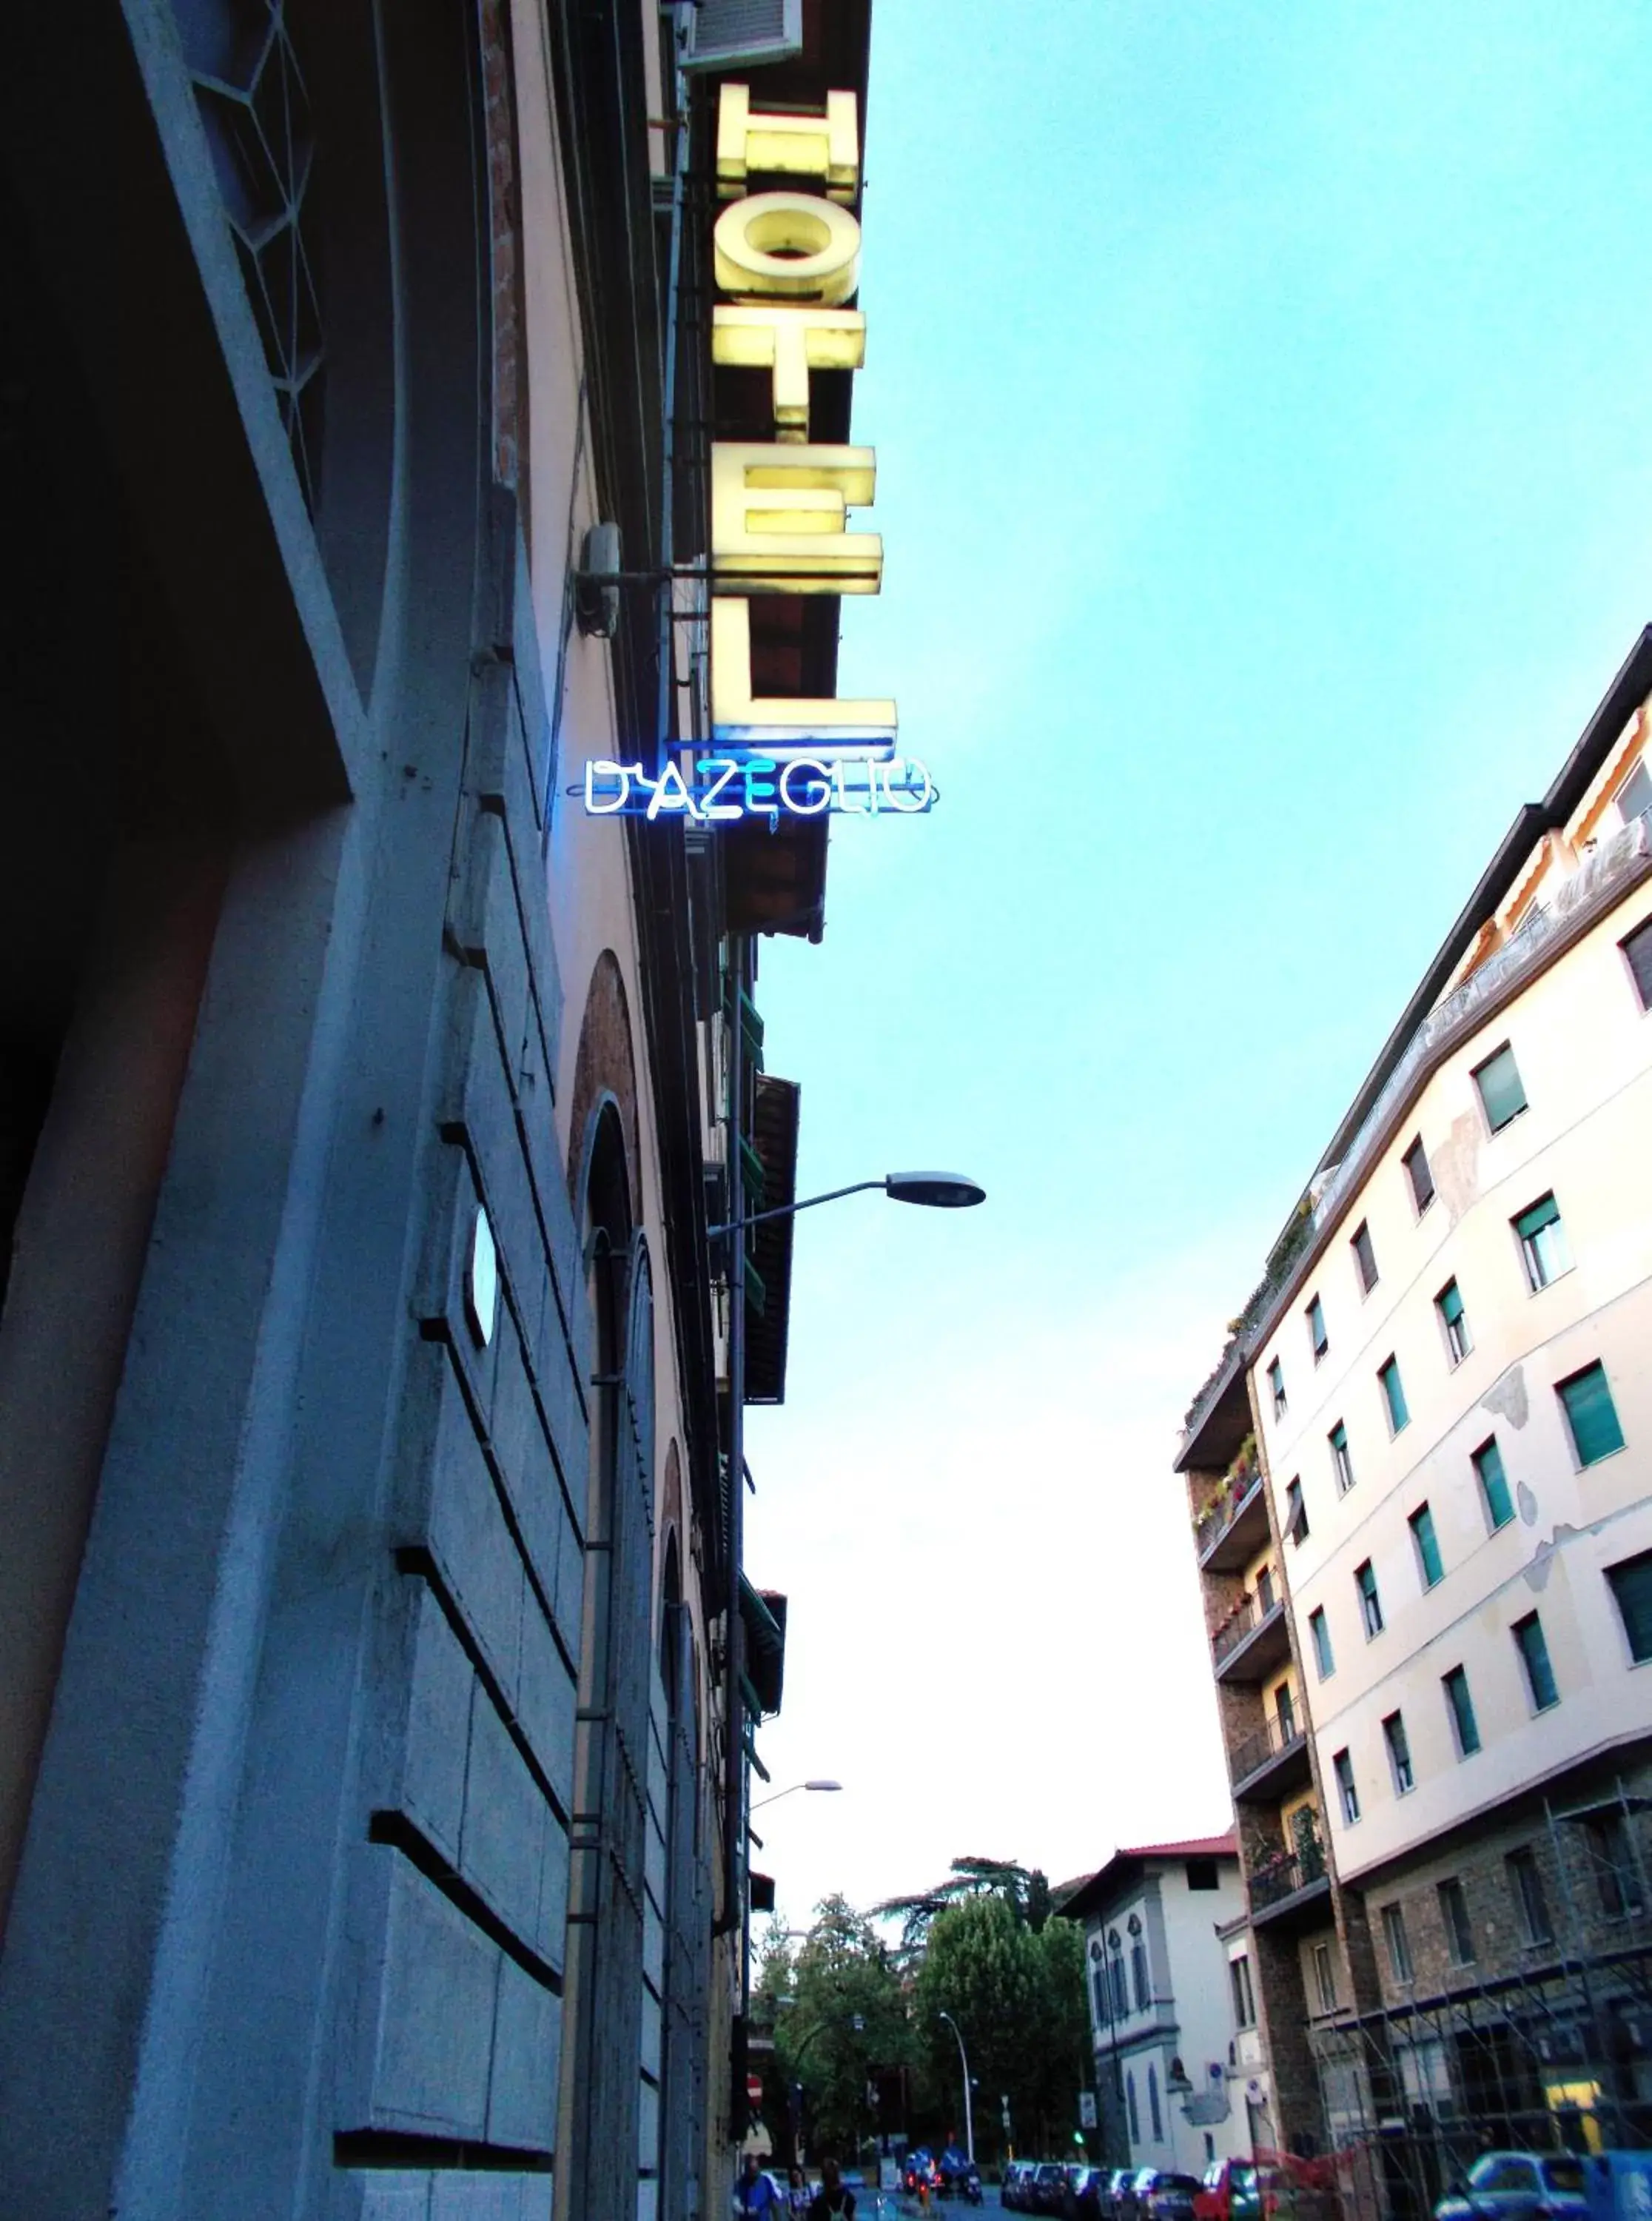 Street view in Hotel d'Azeglio Firenze